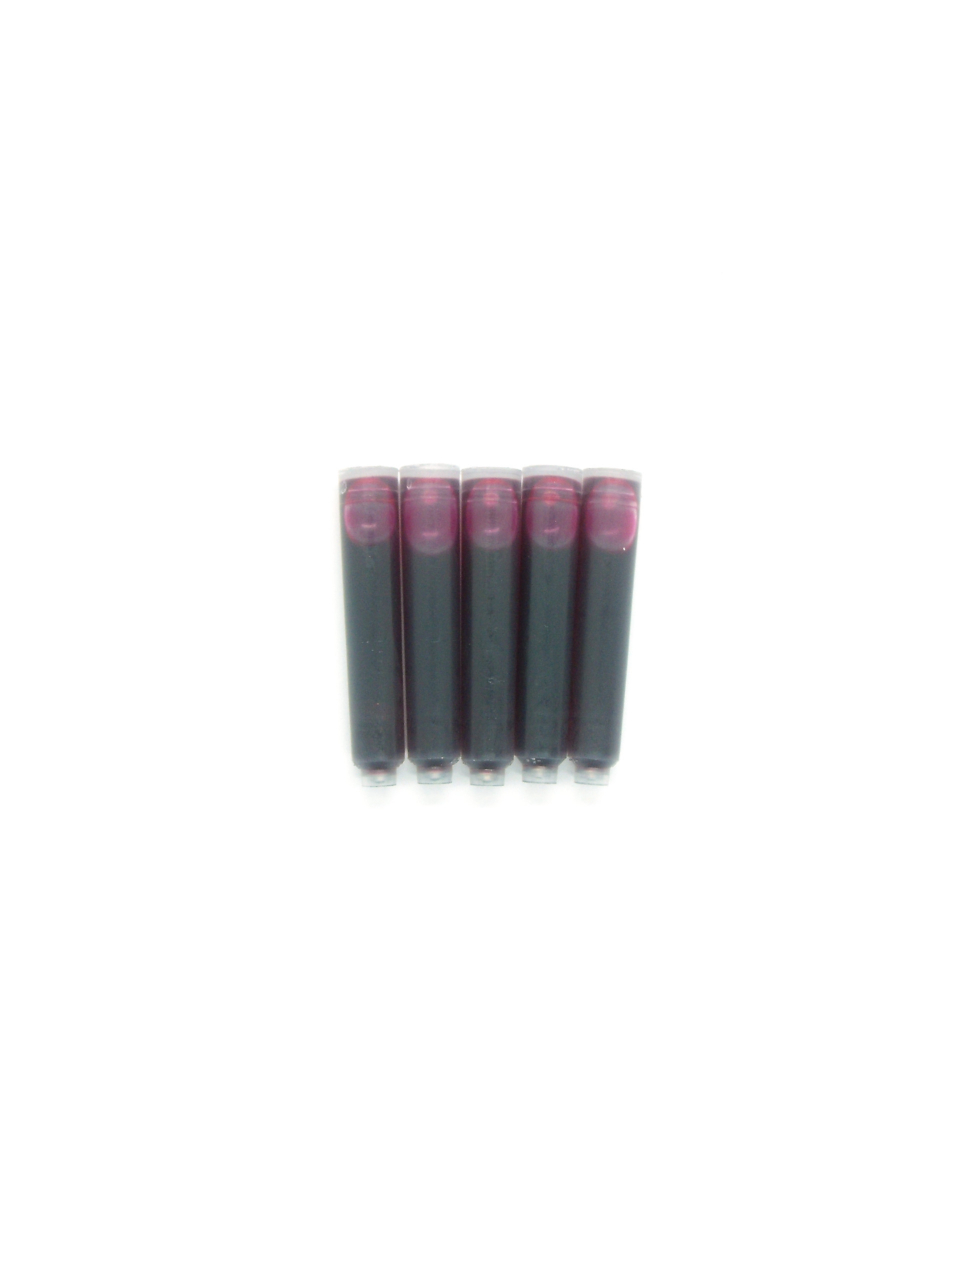 PenConverter Ink Cartridges For Stypen Fountain Pens (Pink)